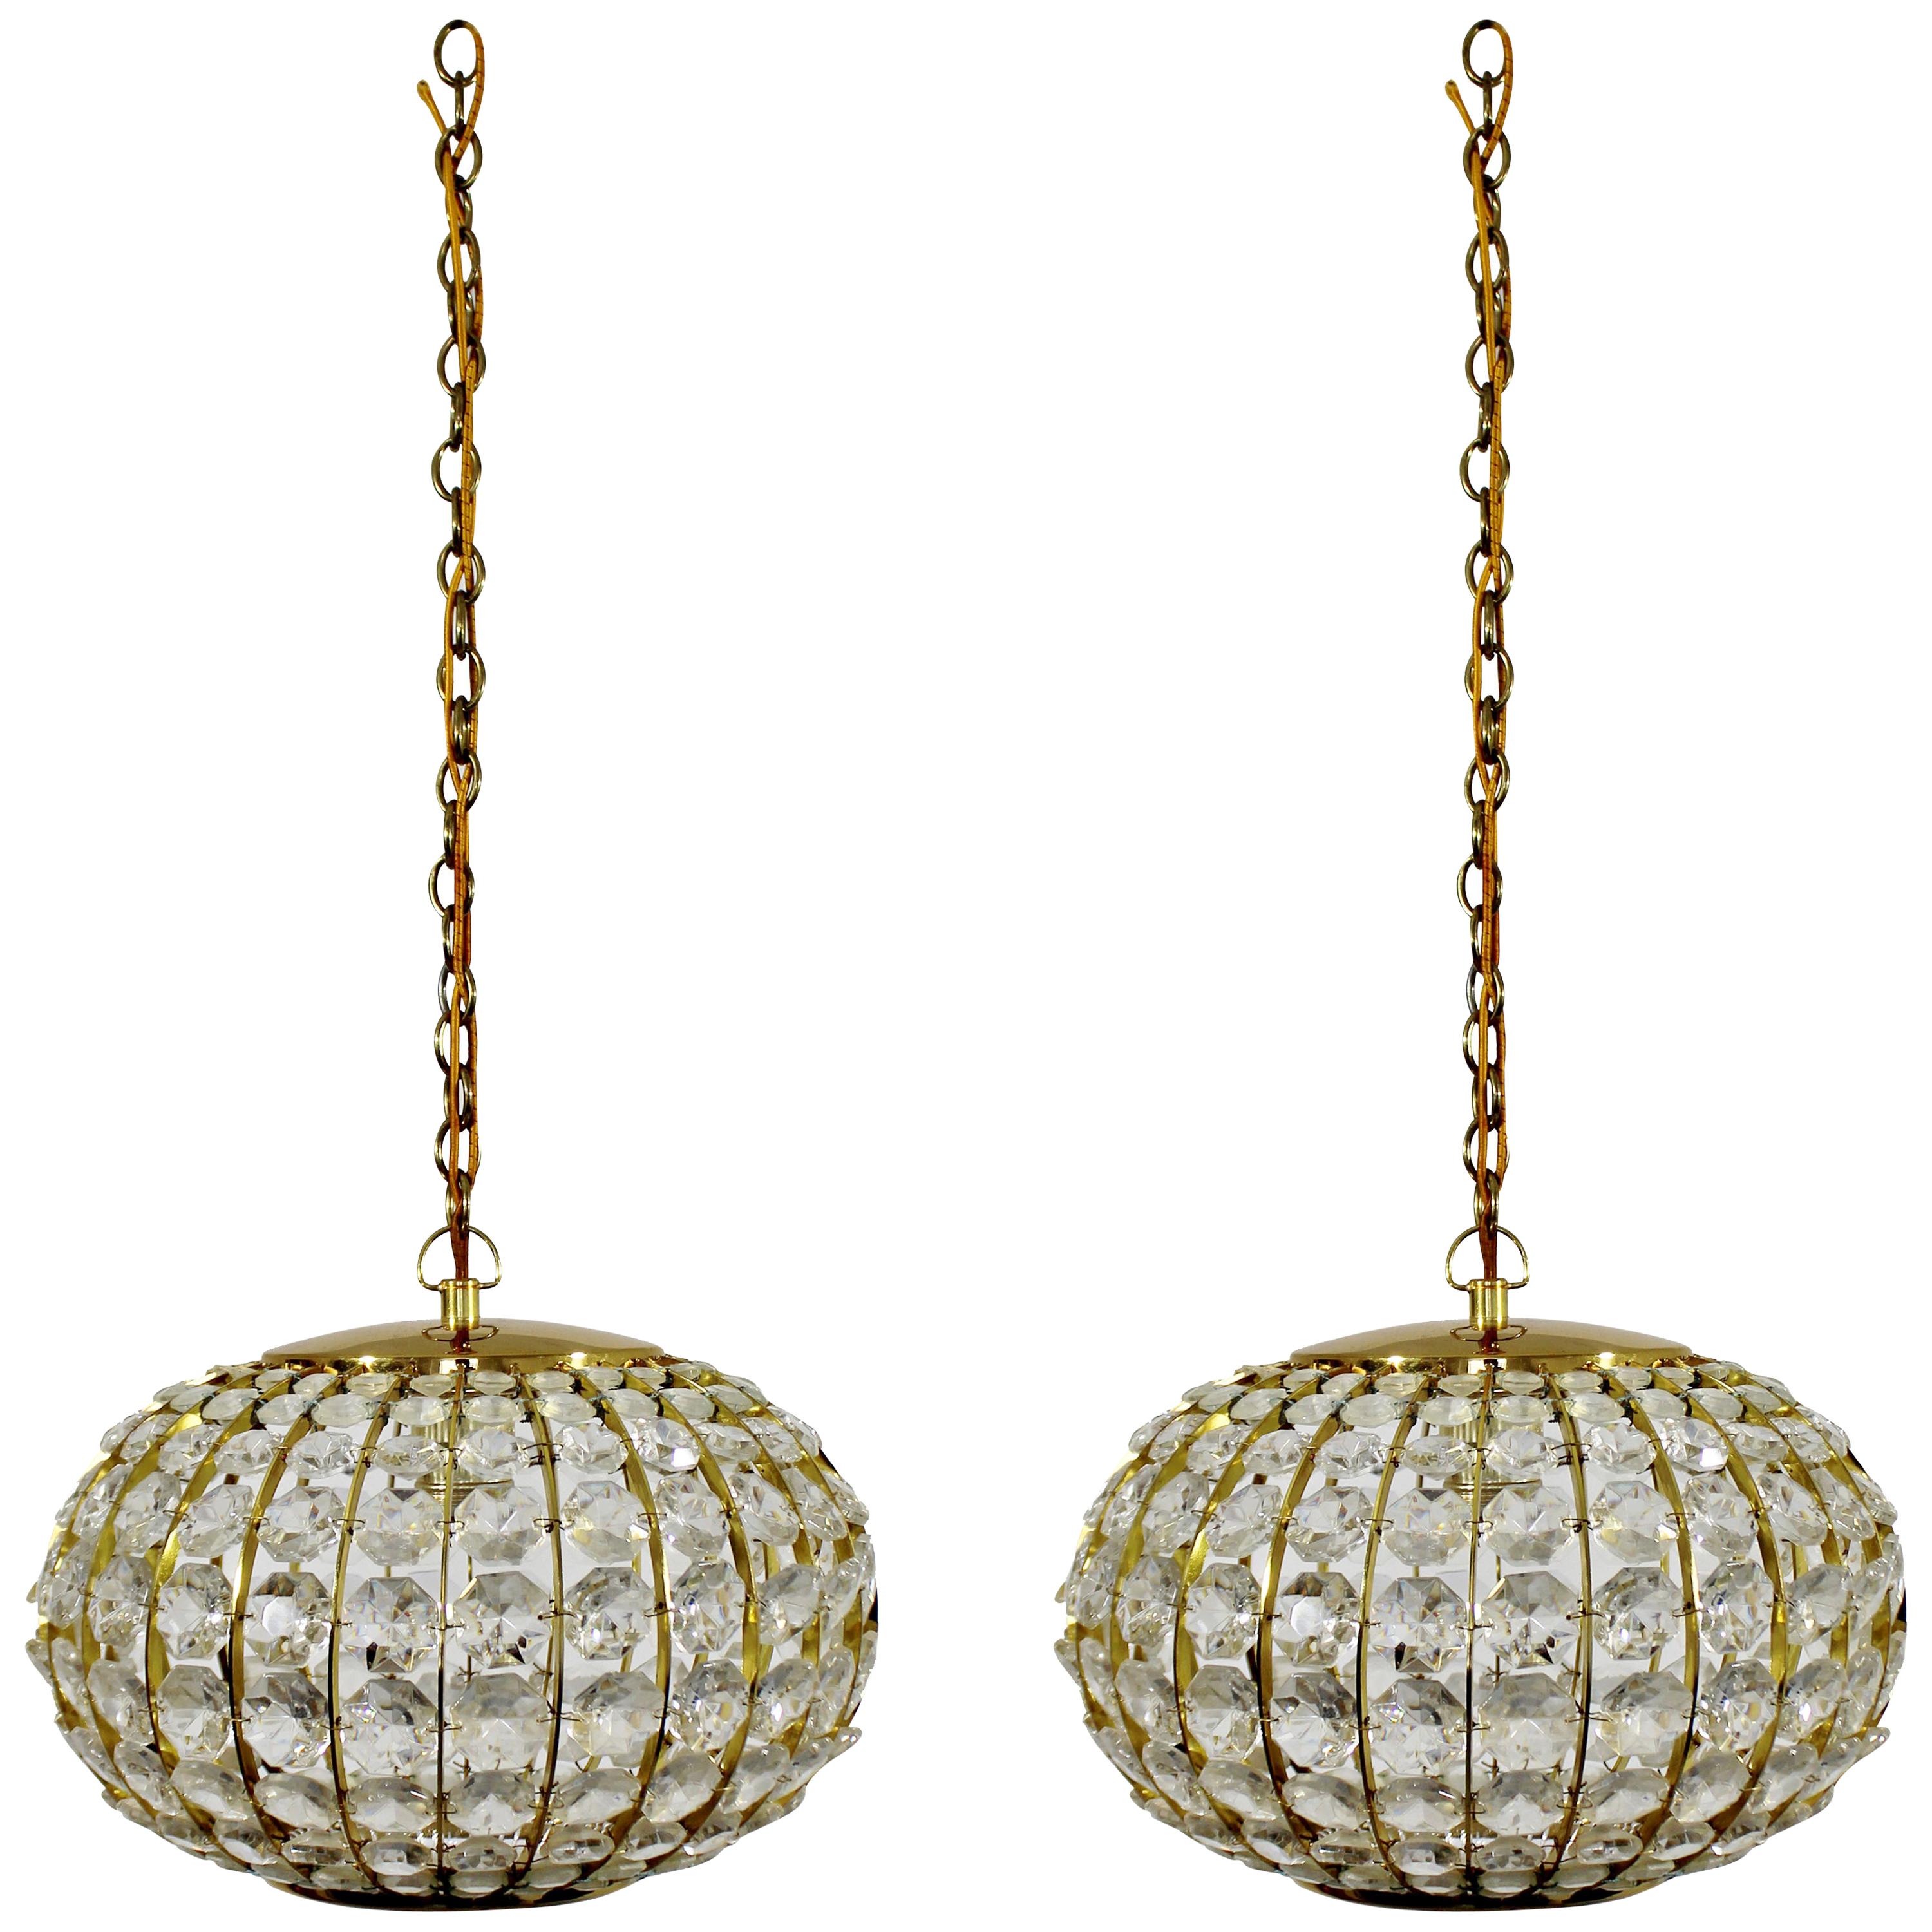 Mid-Century Modern Pair of Crystal & Brass Hanging Pendant Light Fixtures, 1950s